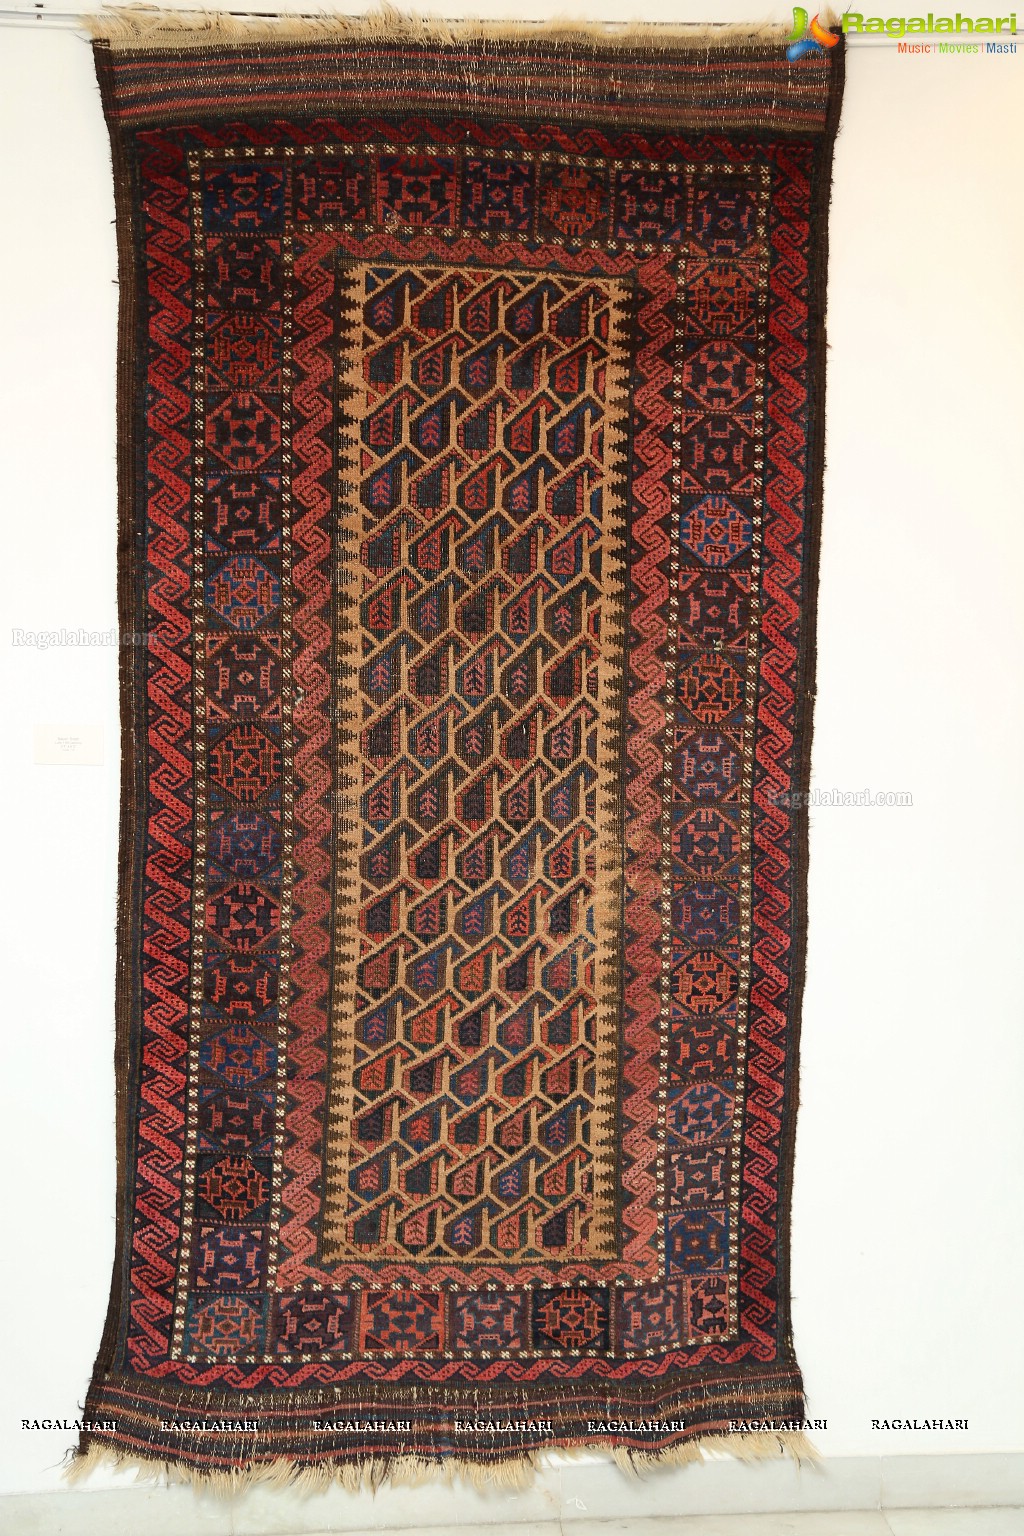 Unique Exhibition of Rare Tribal Carpets at Shrishti Art Gallery, Hyderabad